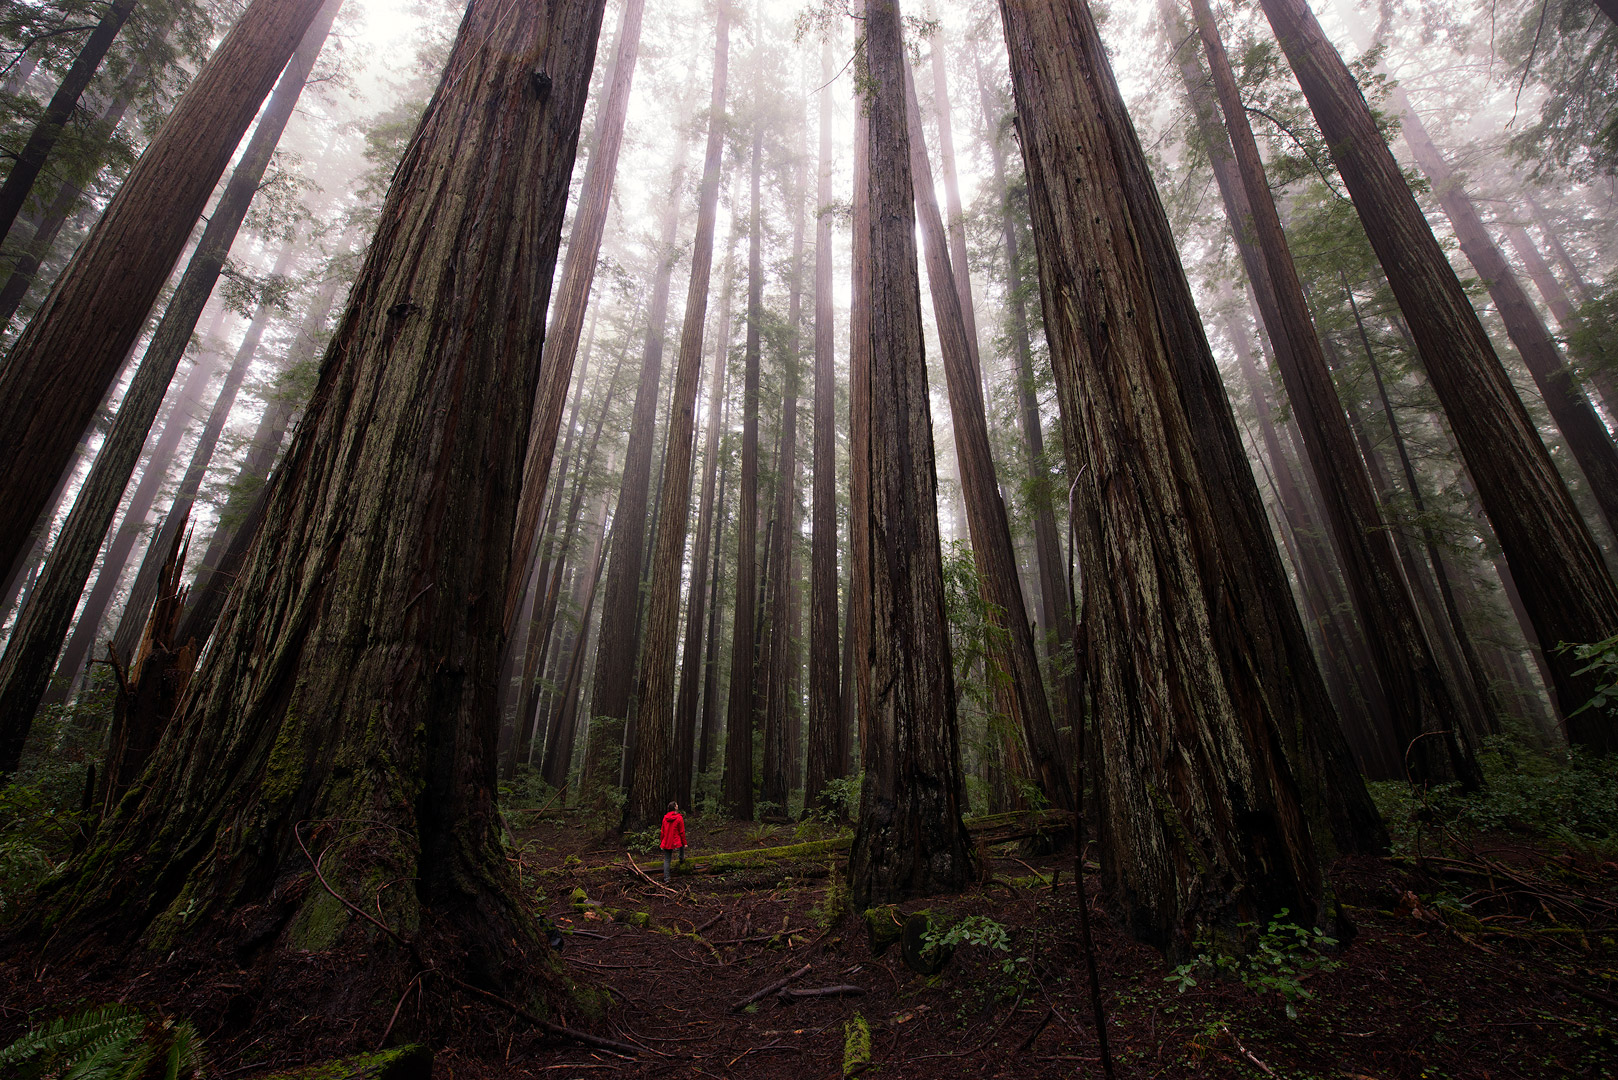 Humboldt Redwoods State Park, California, Giant Redwoods, Redwoods, Trees, Amazing Trees, Oldest Trees, Bernard Chen